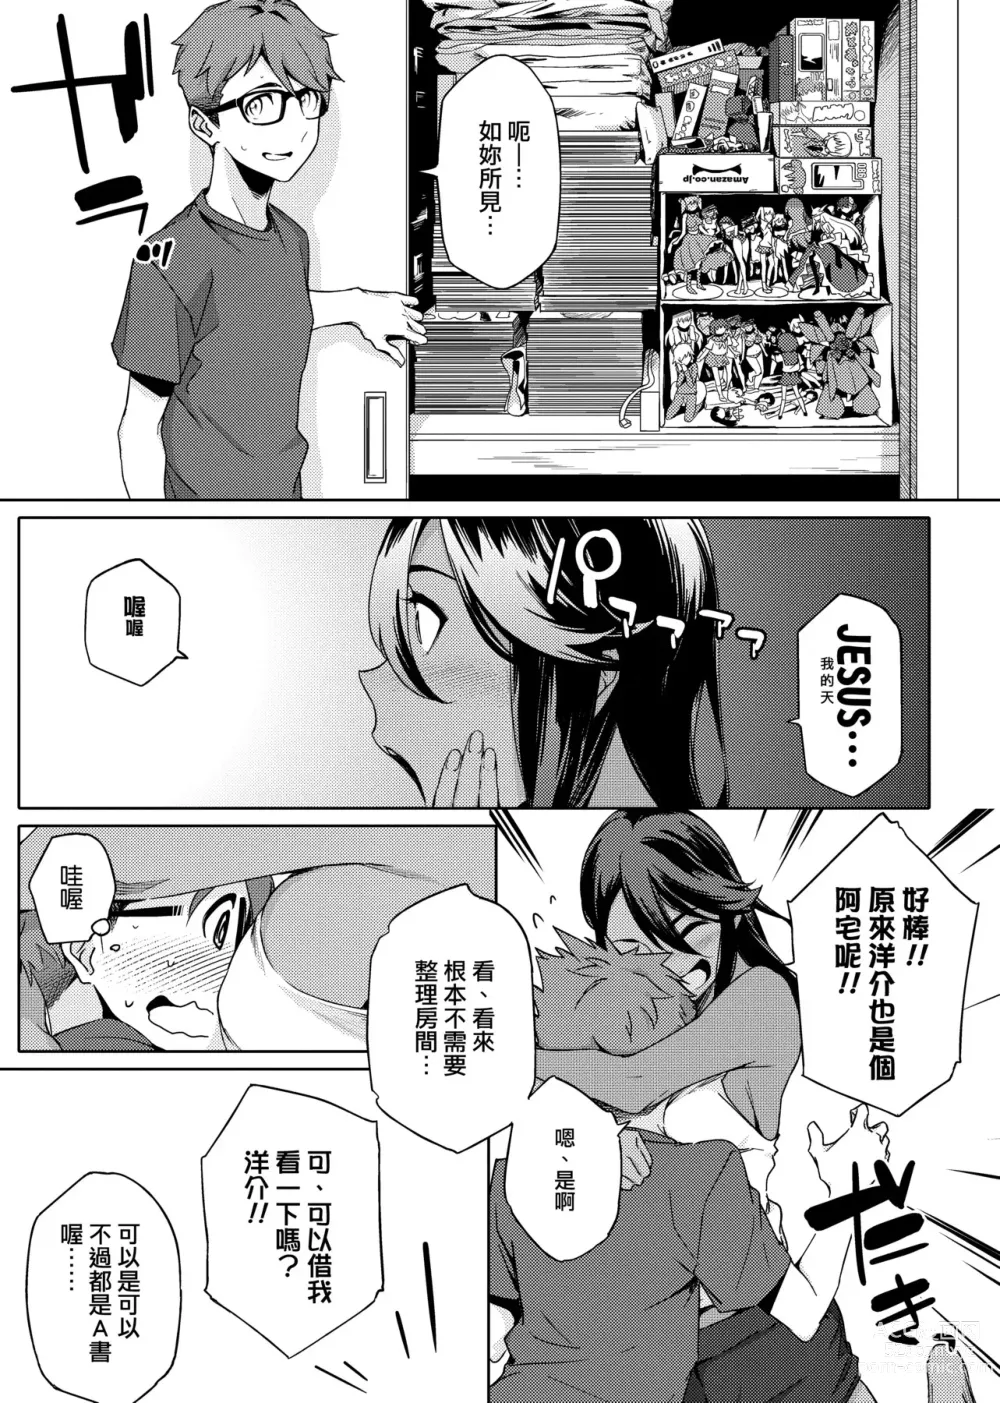 Page 12 of manga Natsu Koi Ota Girl - What Brings You to Japan?